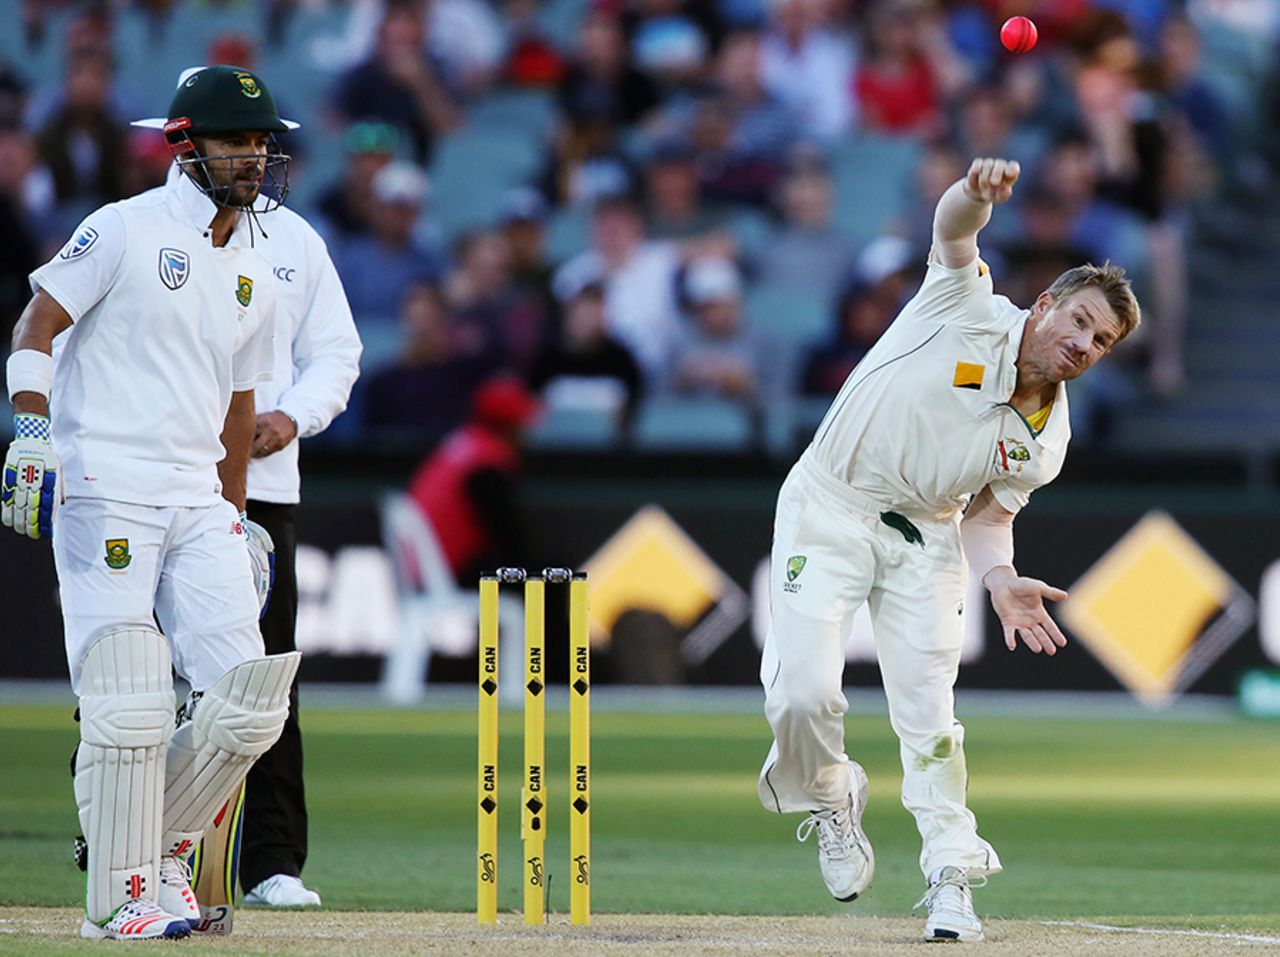 David Warner bowled an over of medium pace, Australia v South Africa, 3rd Test, Adelaide, 3rd day, November 26, 2016